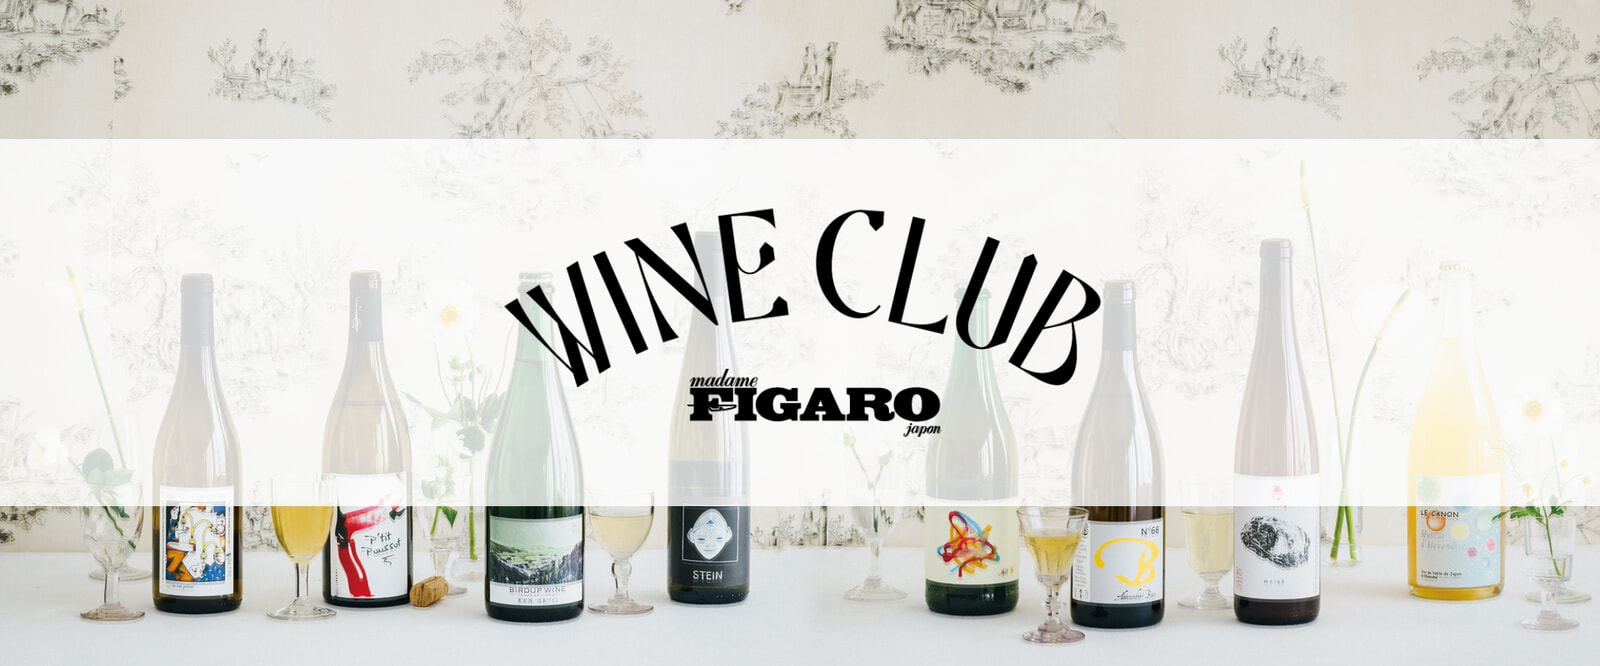 figaro_wine0005.jpeg